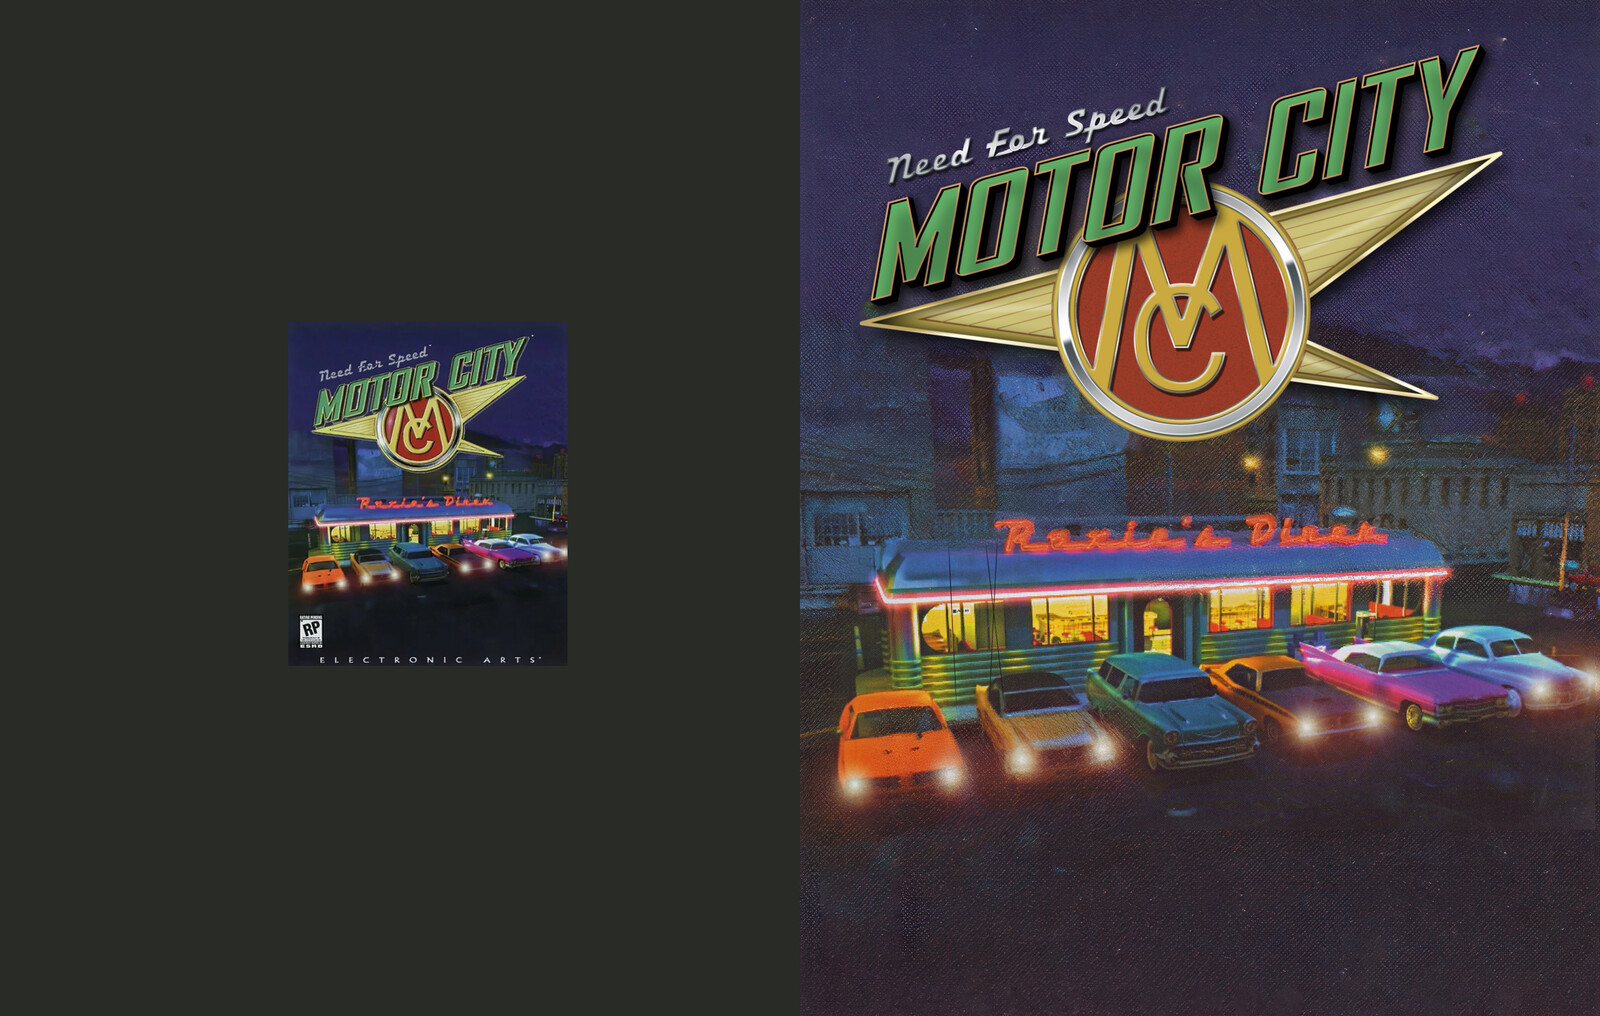 Bonus - Need for Speed Motor City (Original Scan vs. Poster format)